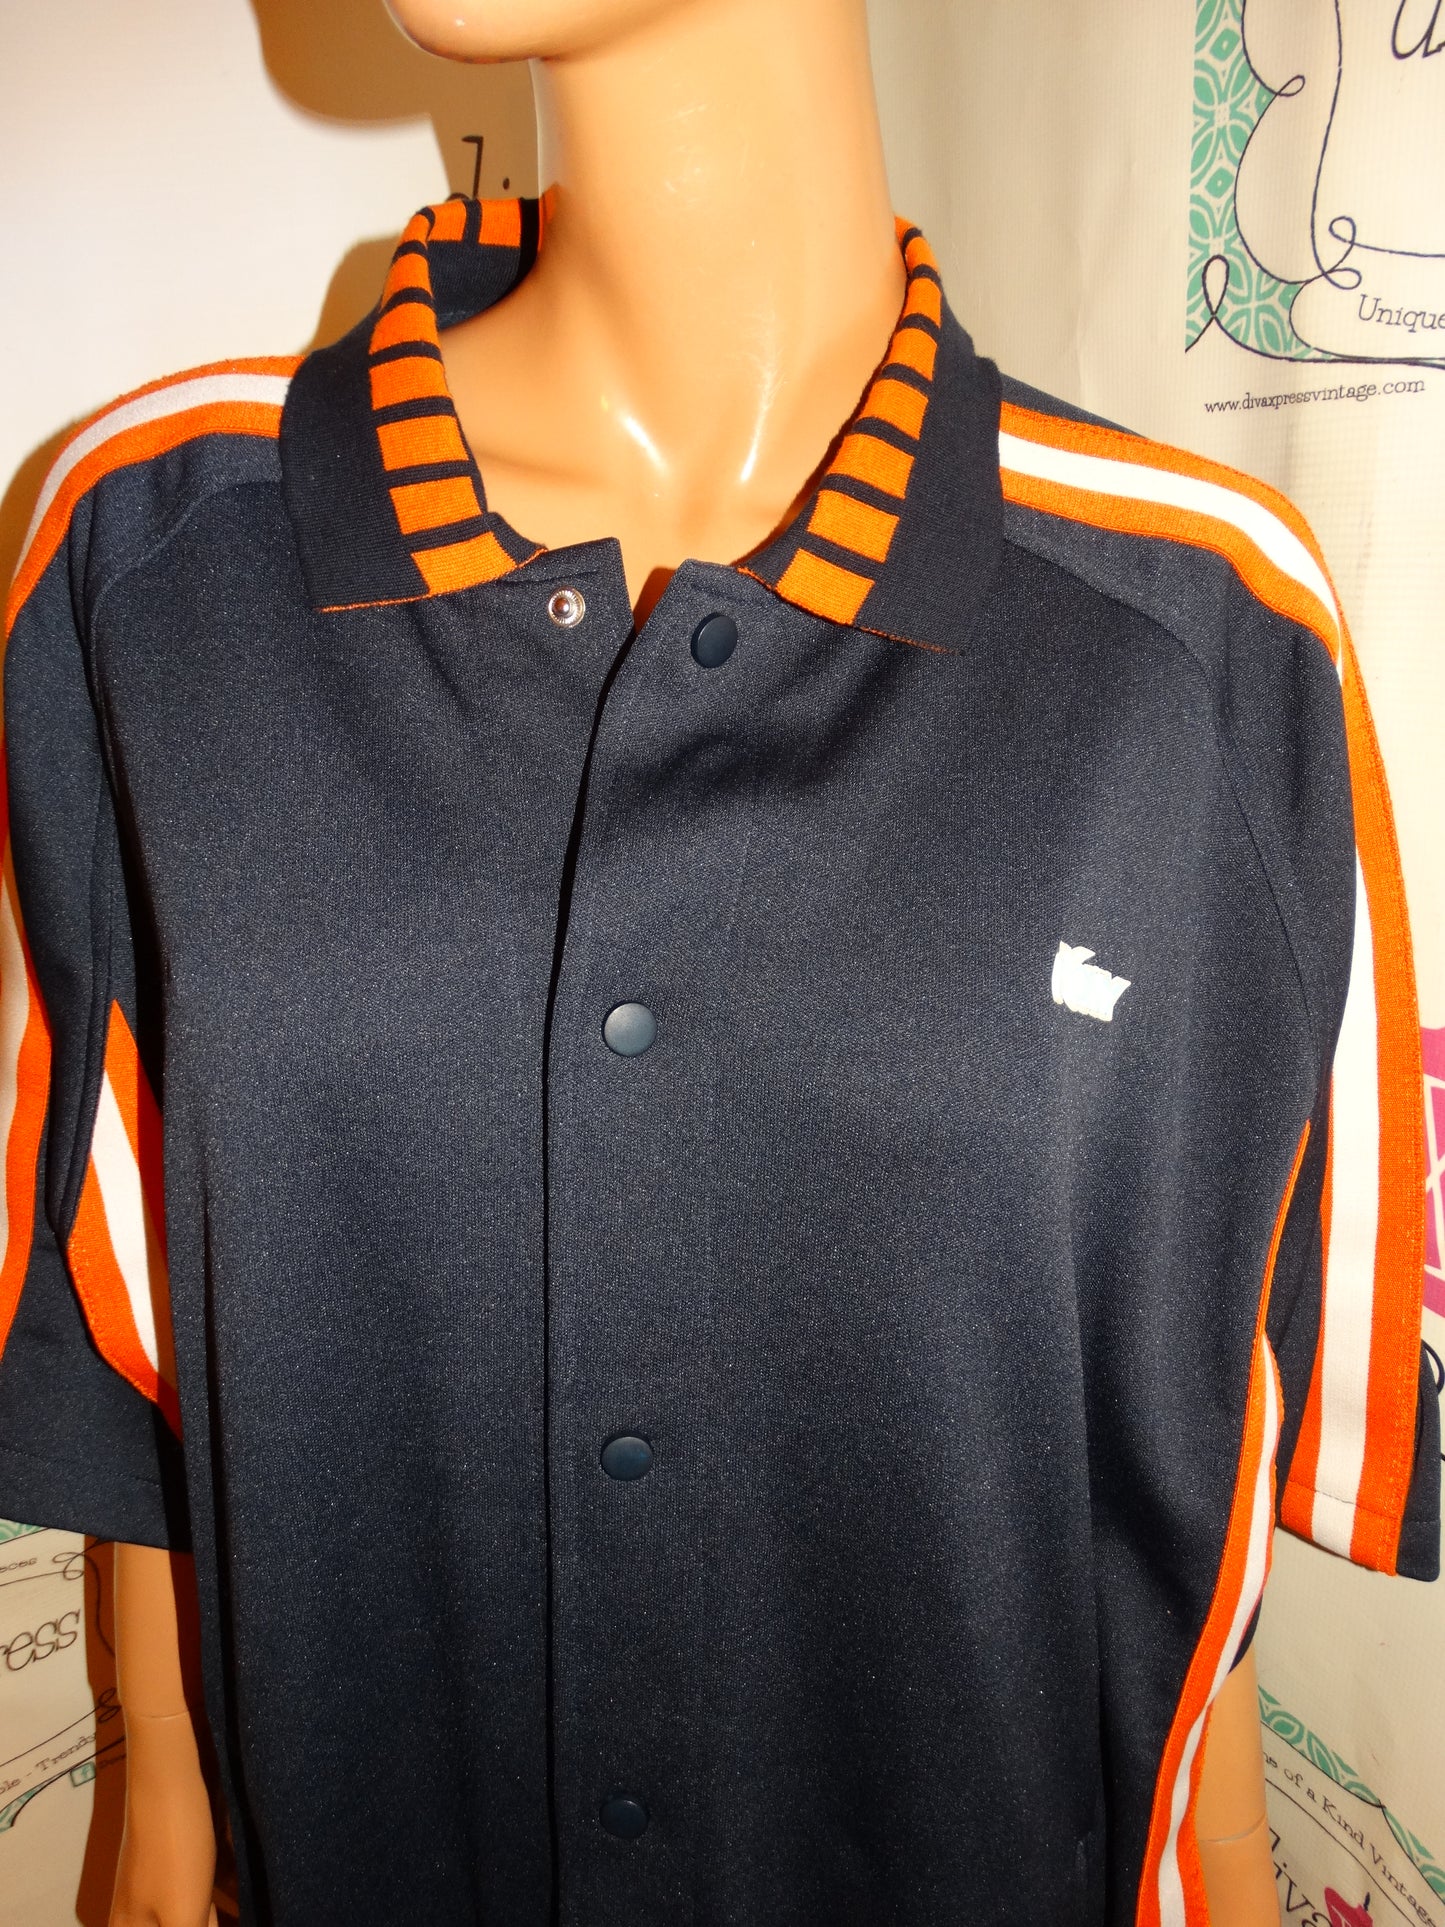 Vintage Pony Blue/White Orange Jersey Jacket Size 3x